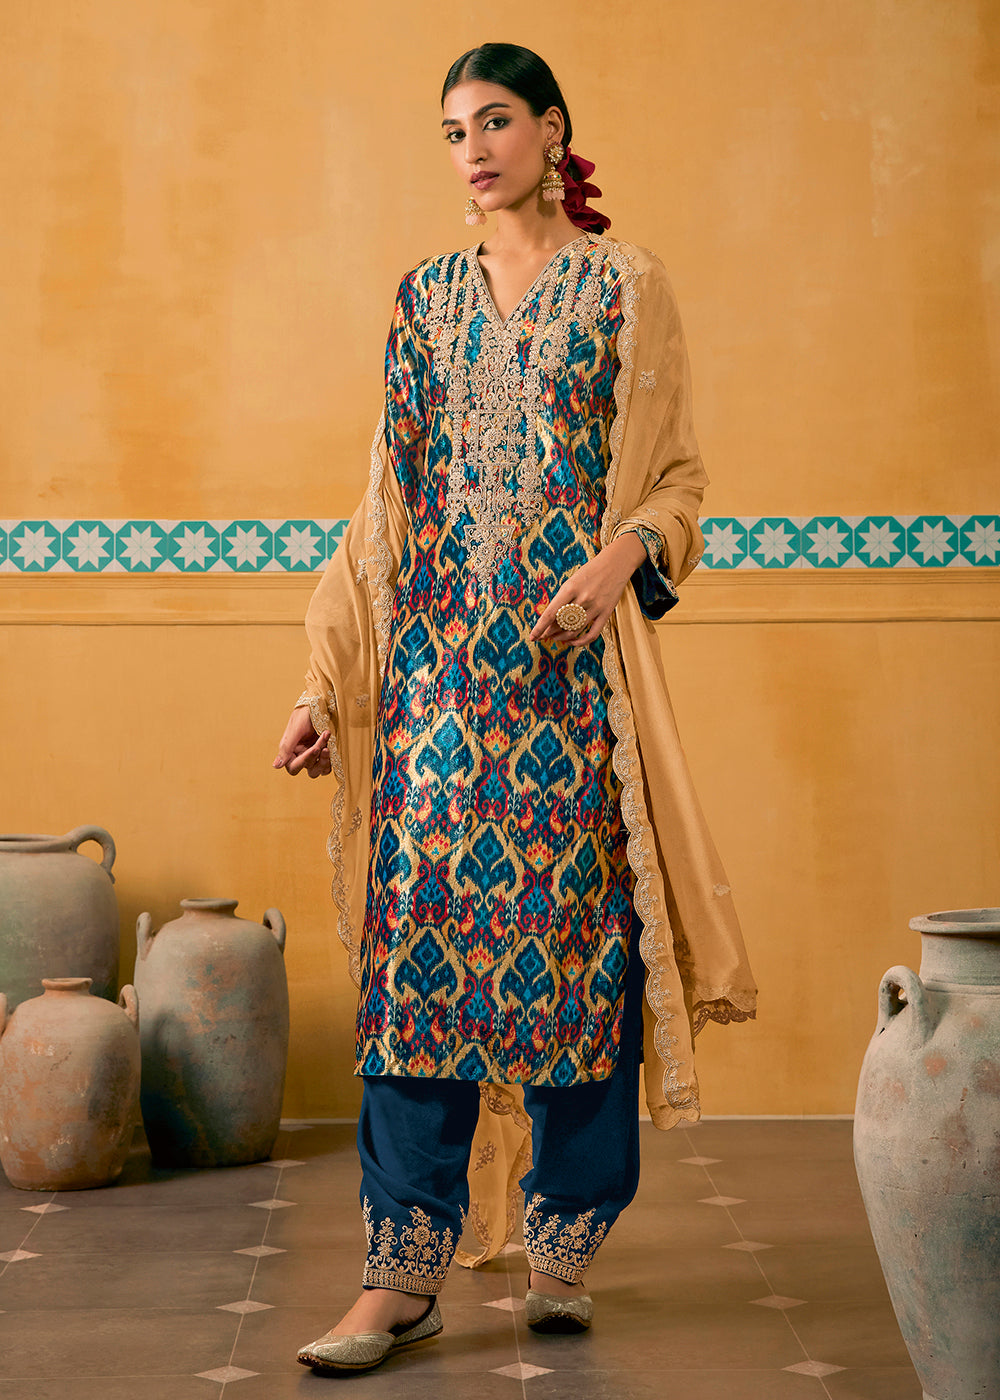 Buy Now Teal Blue Multicolor Digital Printed Embroidered Velvet Salwar Suit Online in USA, UK, Canada, Germany, Australia & Worldwide at Empress Clothing. 